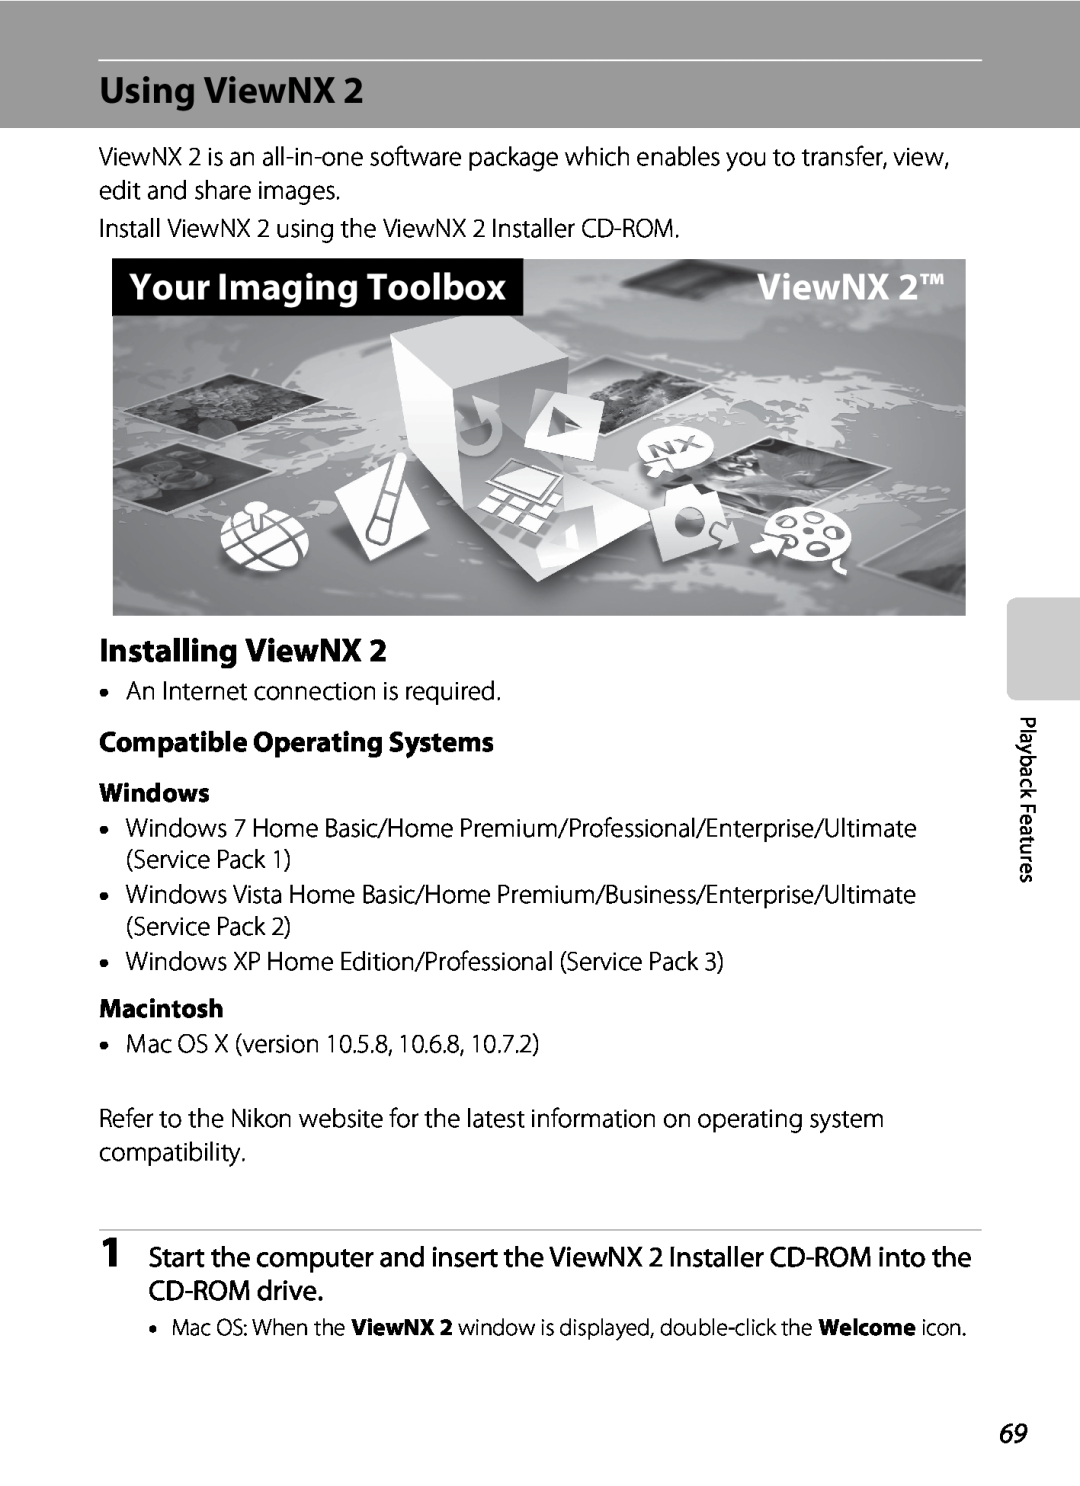 Nikon S2600 manual Using ViewNX, Installing ViewNX, Compatible Operating Systems, Windows, Macintosh, Your Imaging Toolbox 